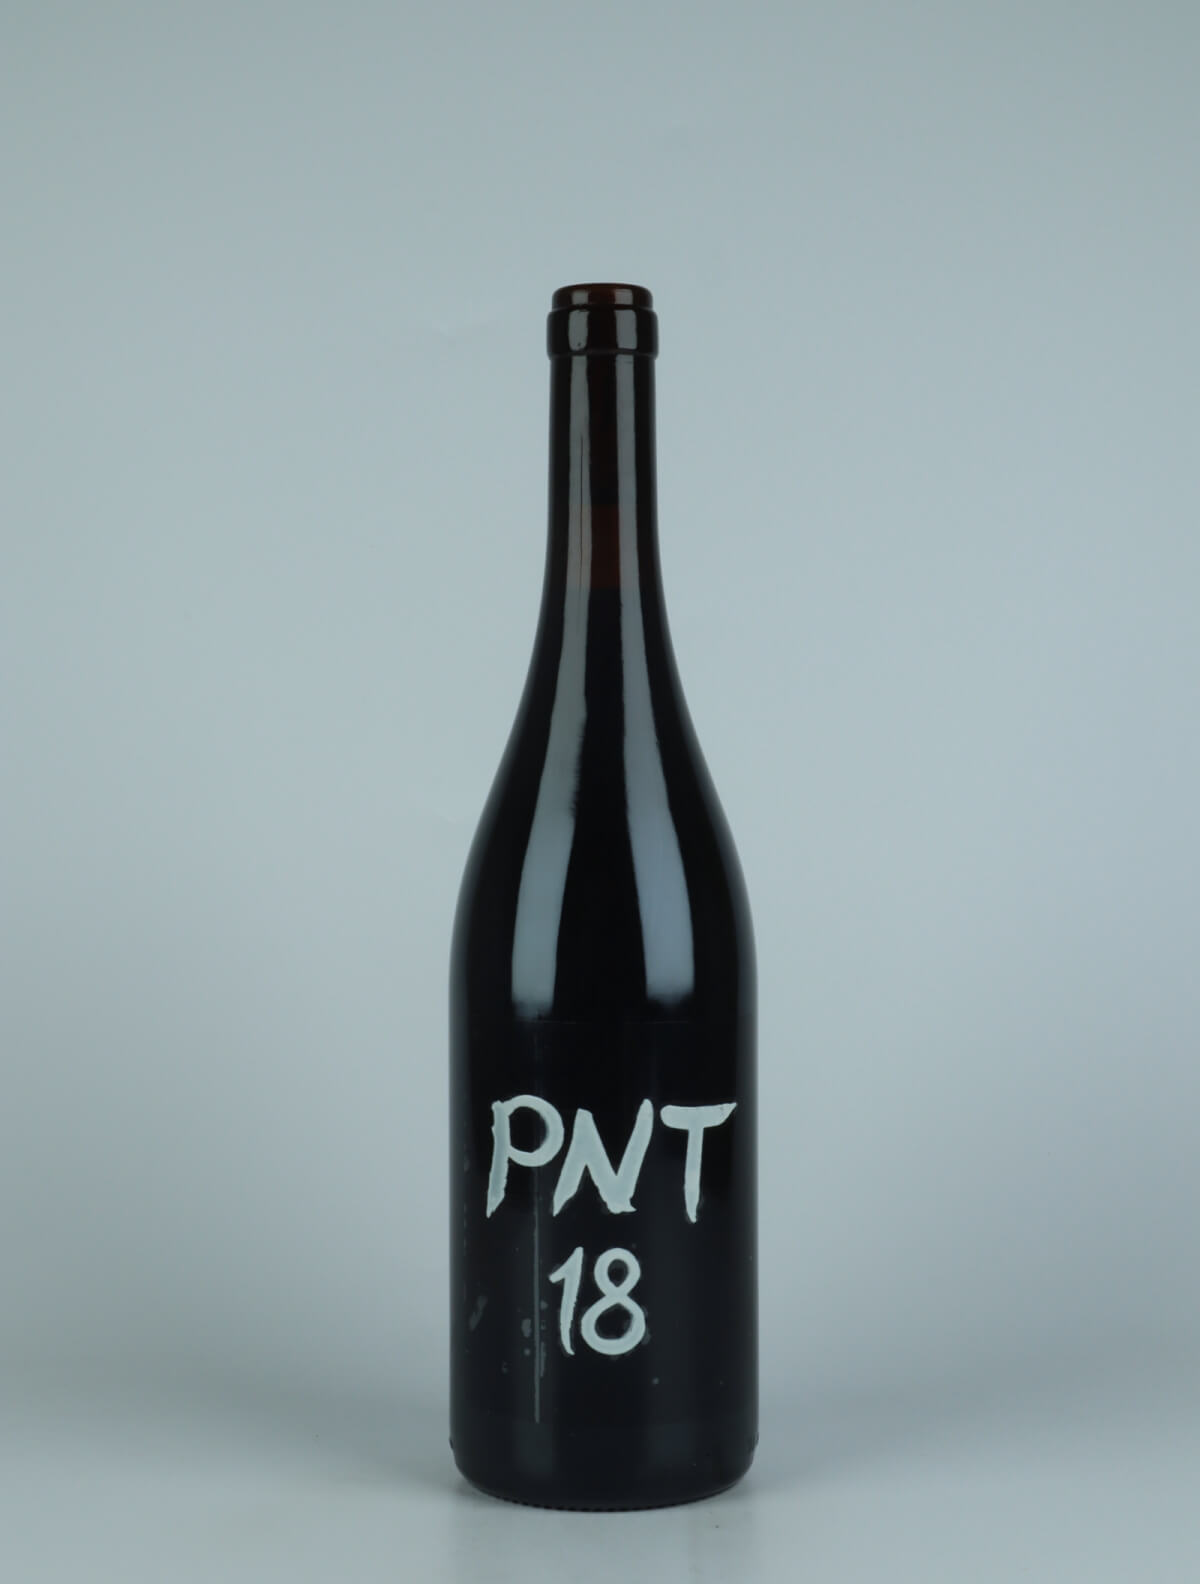 En flaske 2018 PNT Rødvin fra Le Coste, Lazio i Italien